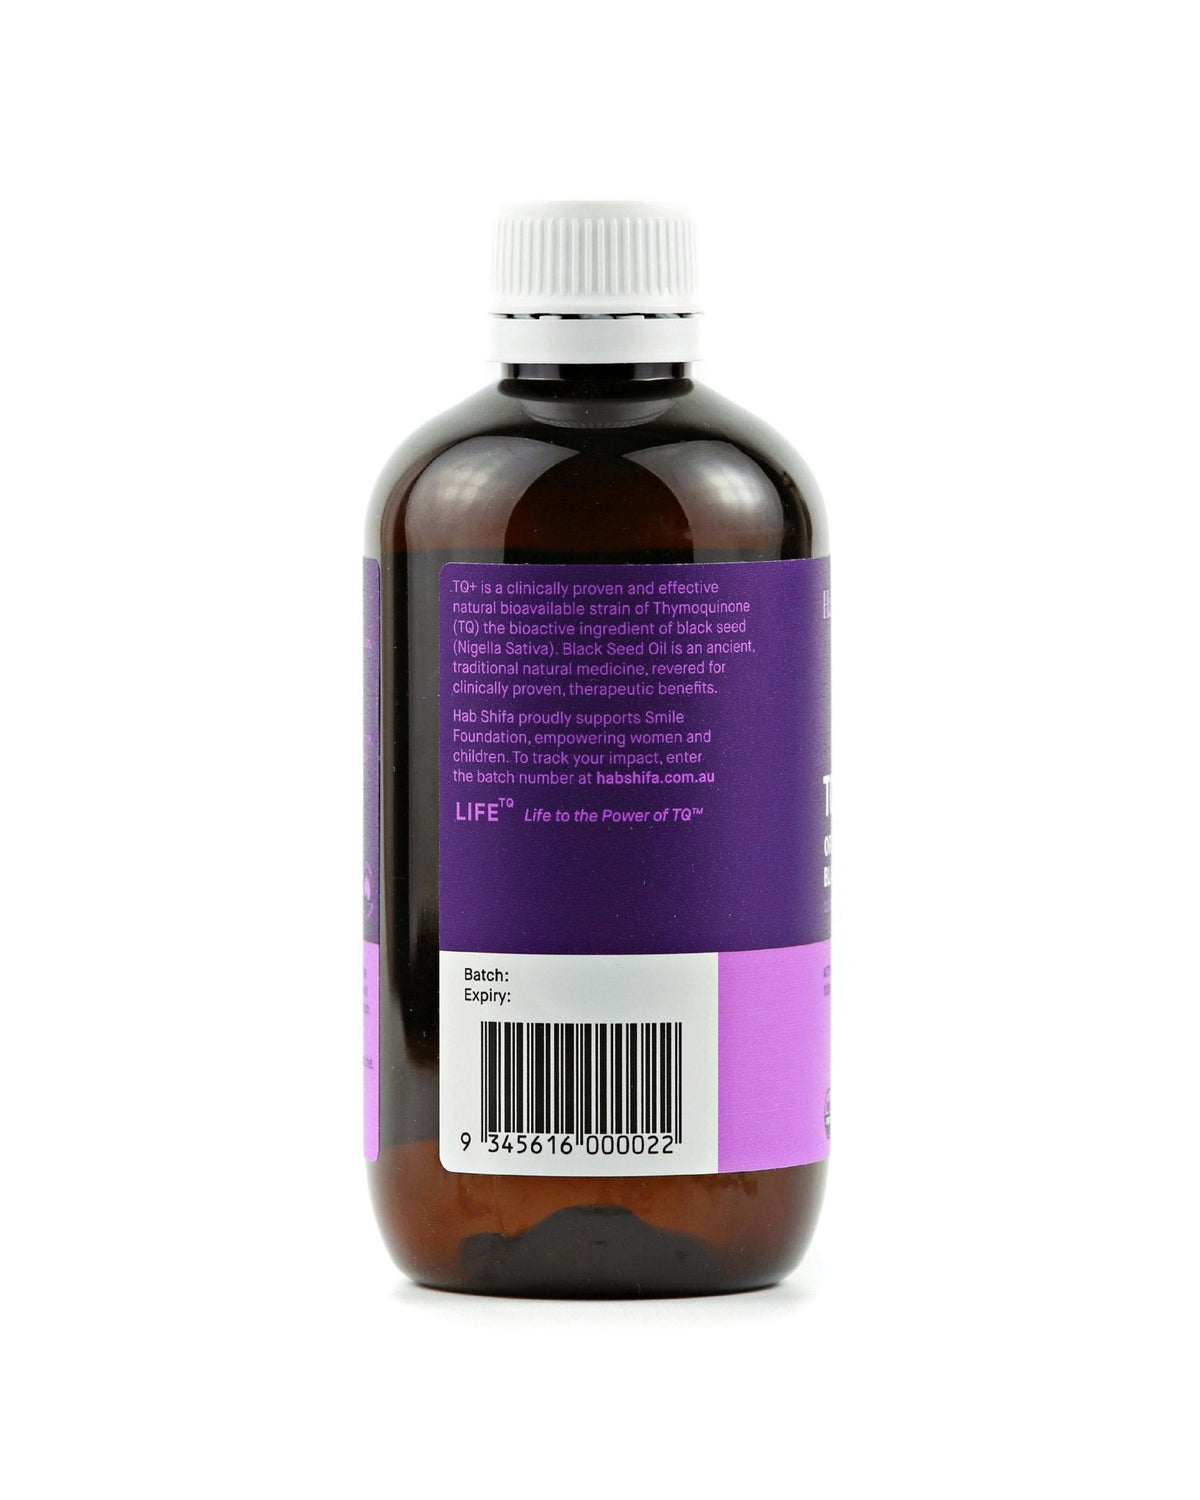 Hab Shifa Black Seed Oil 250ml